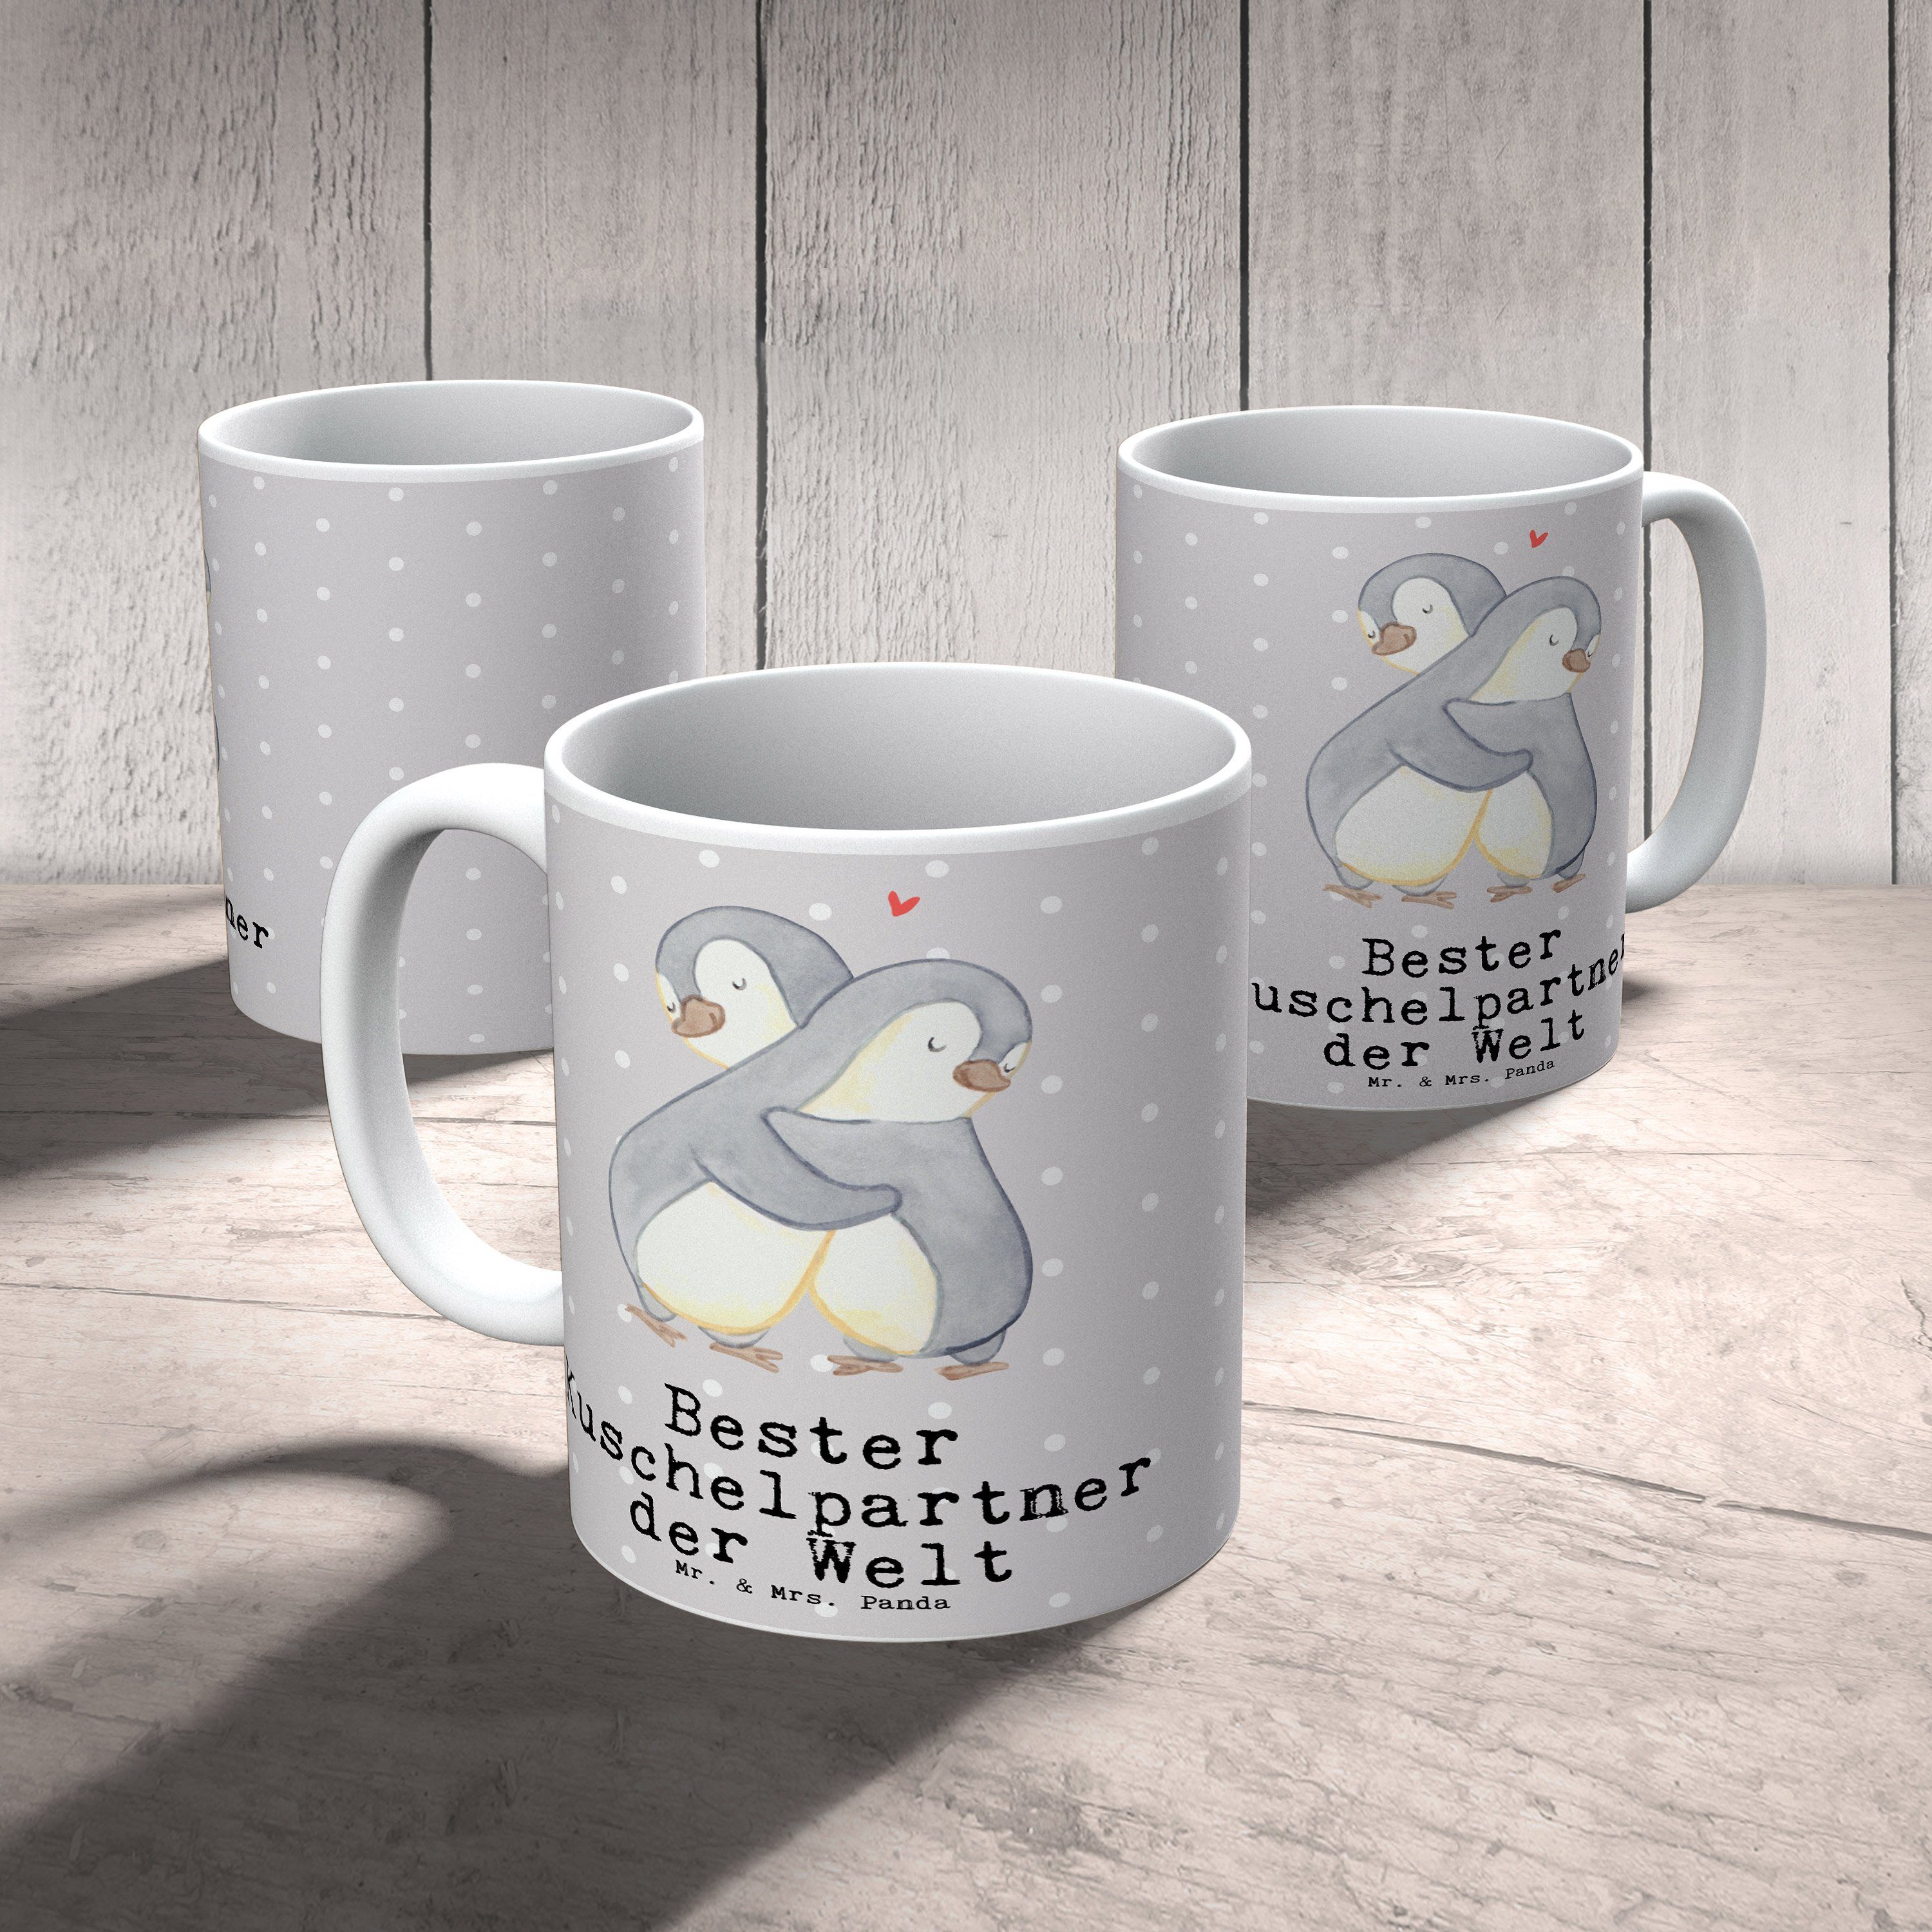 der Keramik - Bester Pinguin Tasse Mrs. Kaf, - Panda & Welt Pastell Grau Mr. Kuschelpartner Geschenk,